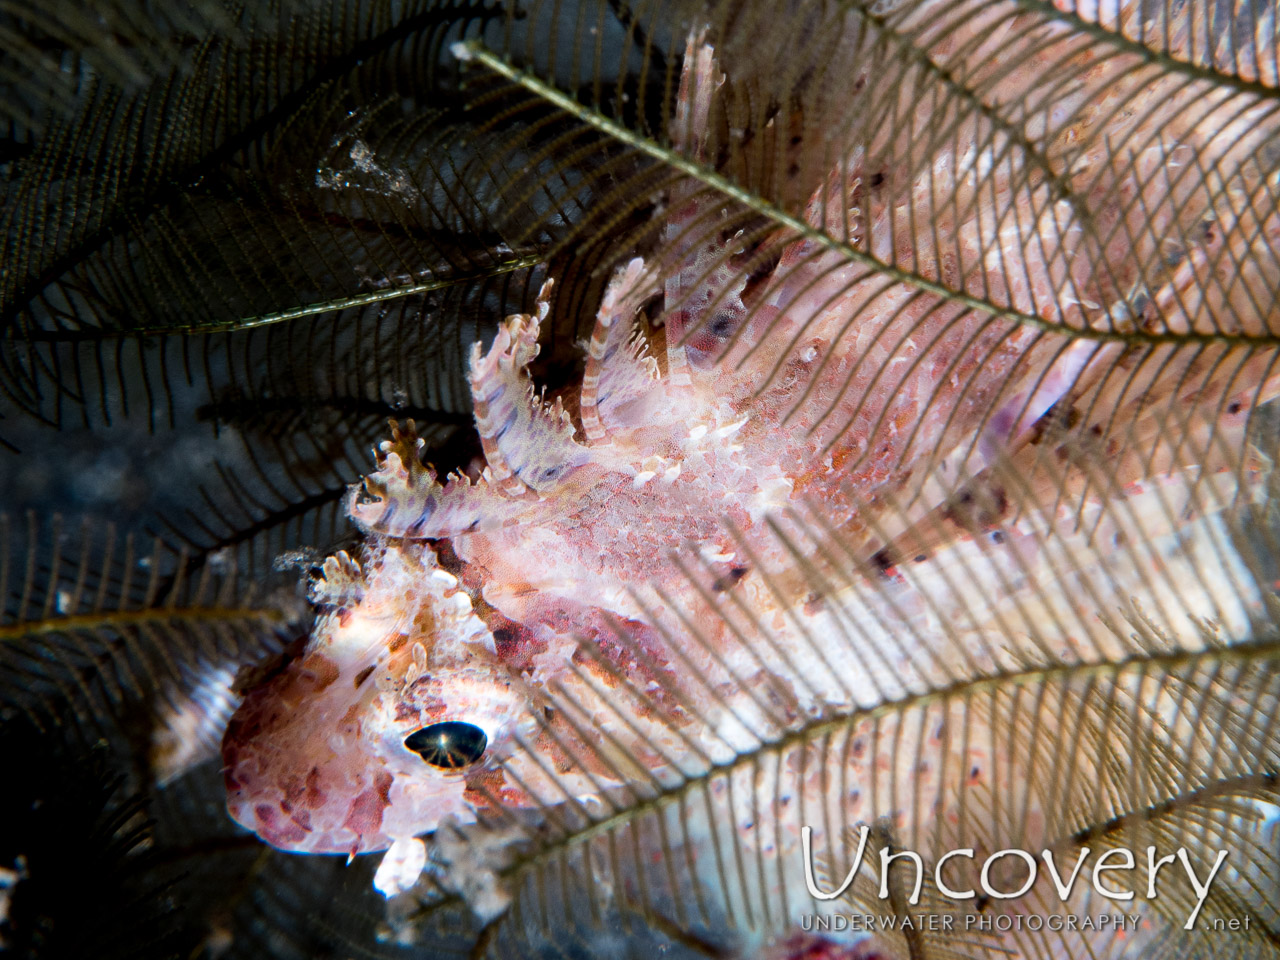 Tassled Scorpionfish (scorpaenopsis Oxycephala), photo taken in Indonesia, North Sulawesi, Lembeh Strait, Rojos